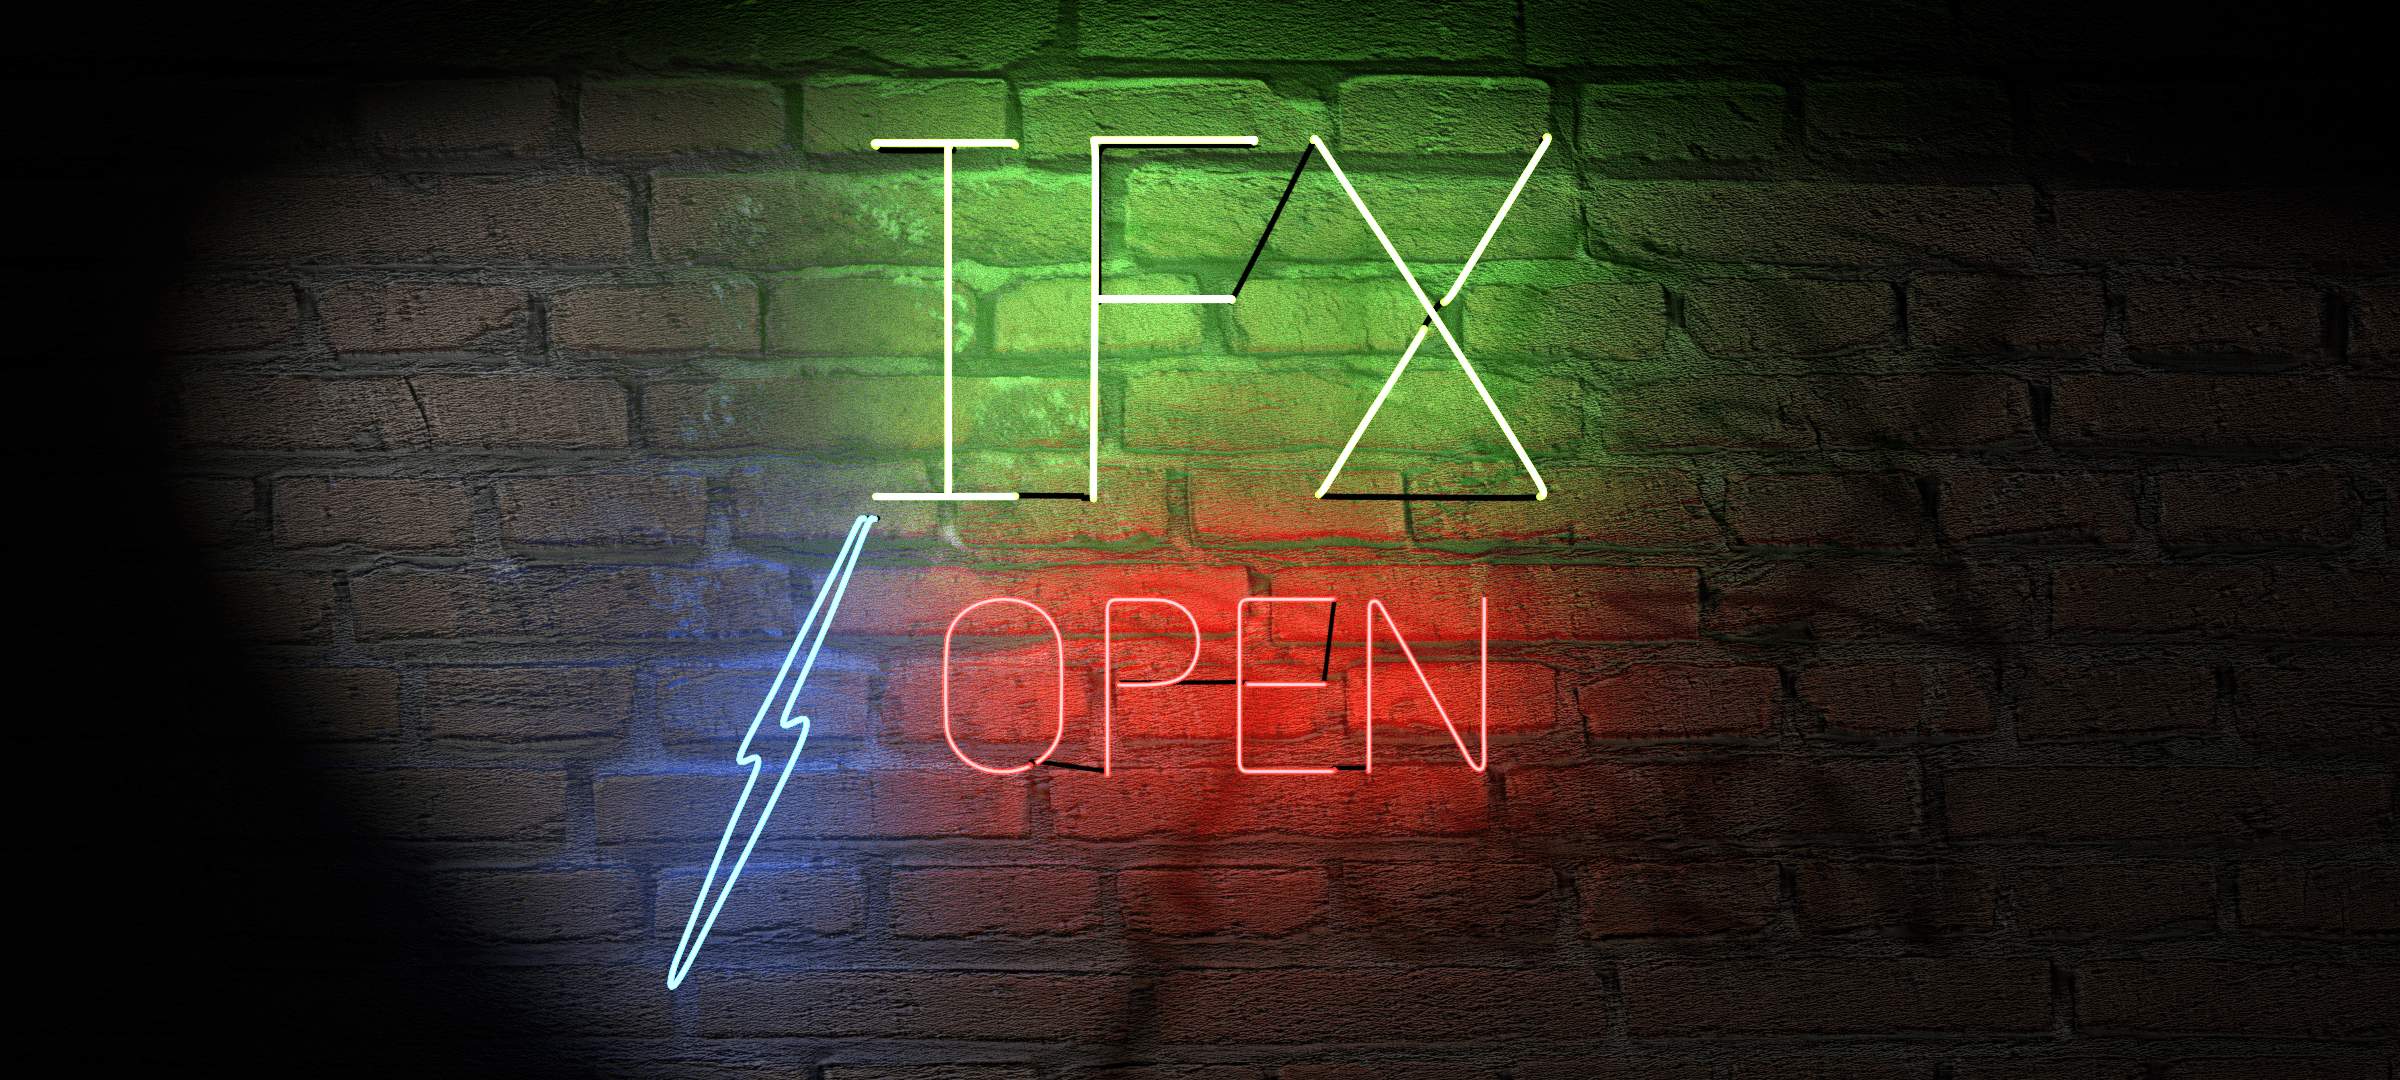 IFX Open Sign - Render by Tim Vittetoe